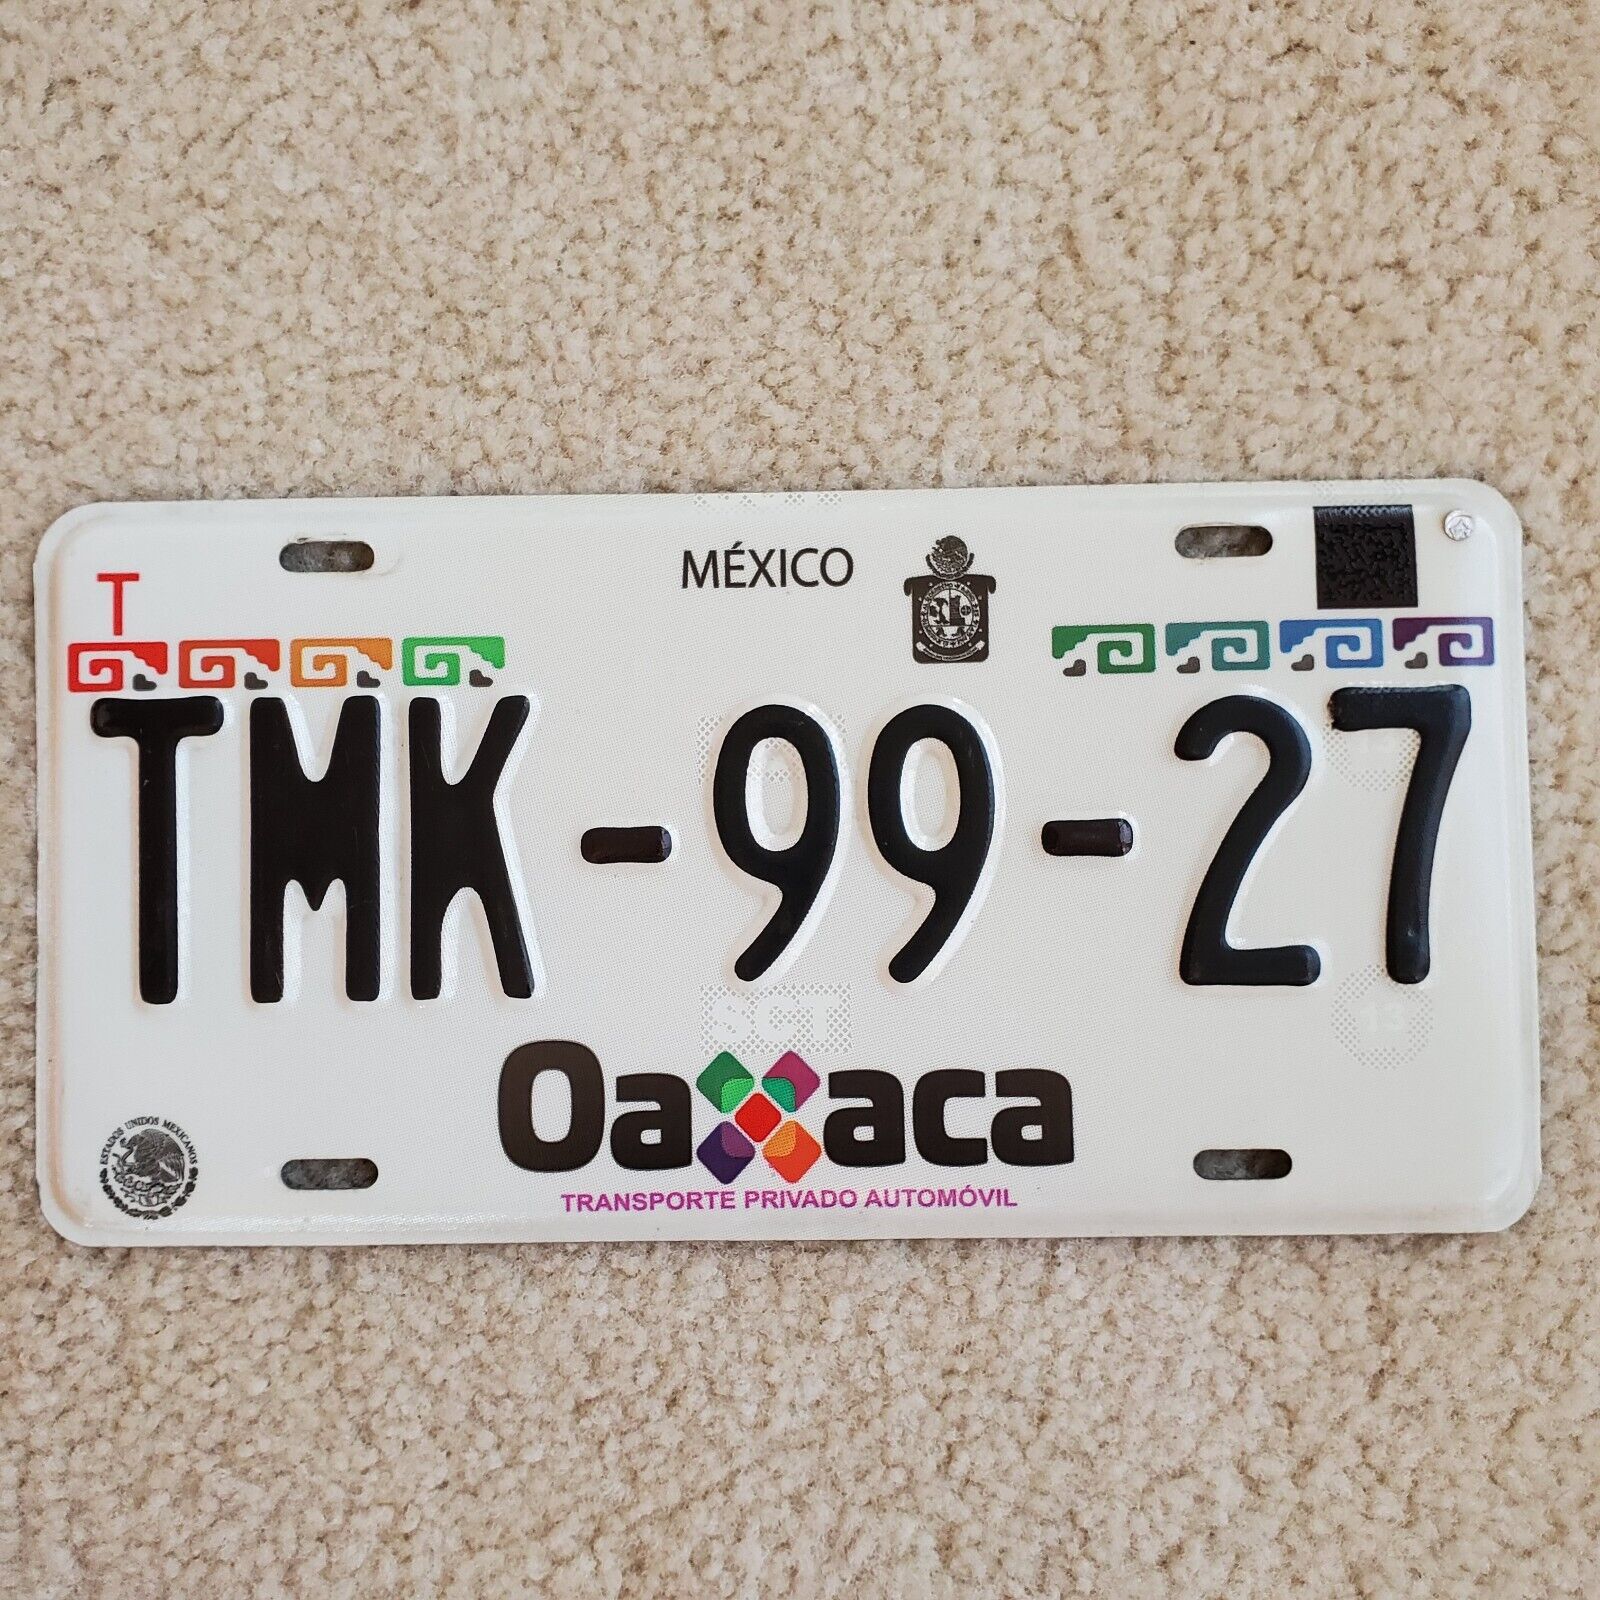 Oaxaca Mexico License Plate TMK-99-27 MINT CONDITION Rear Plate 